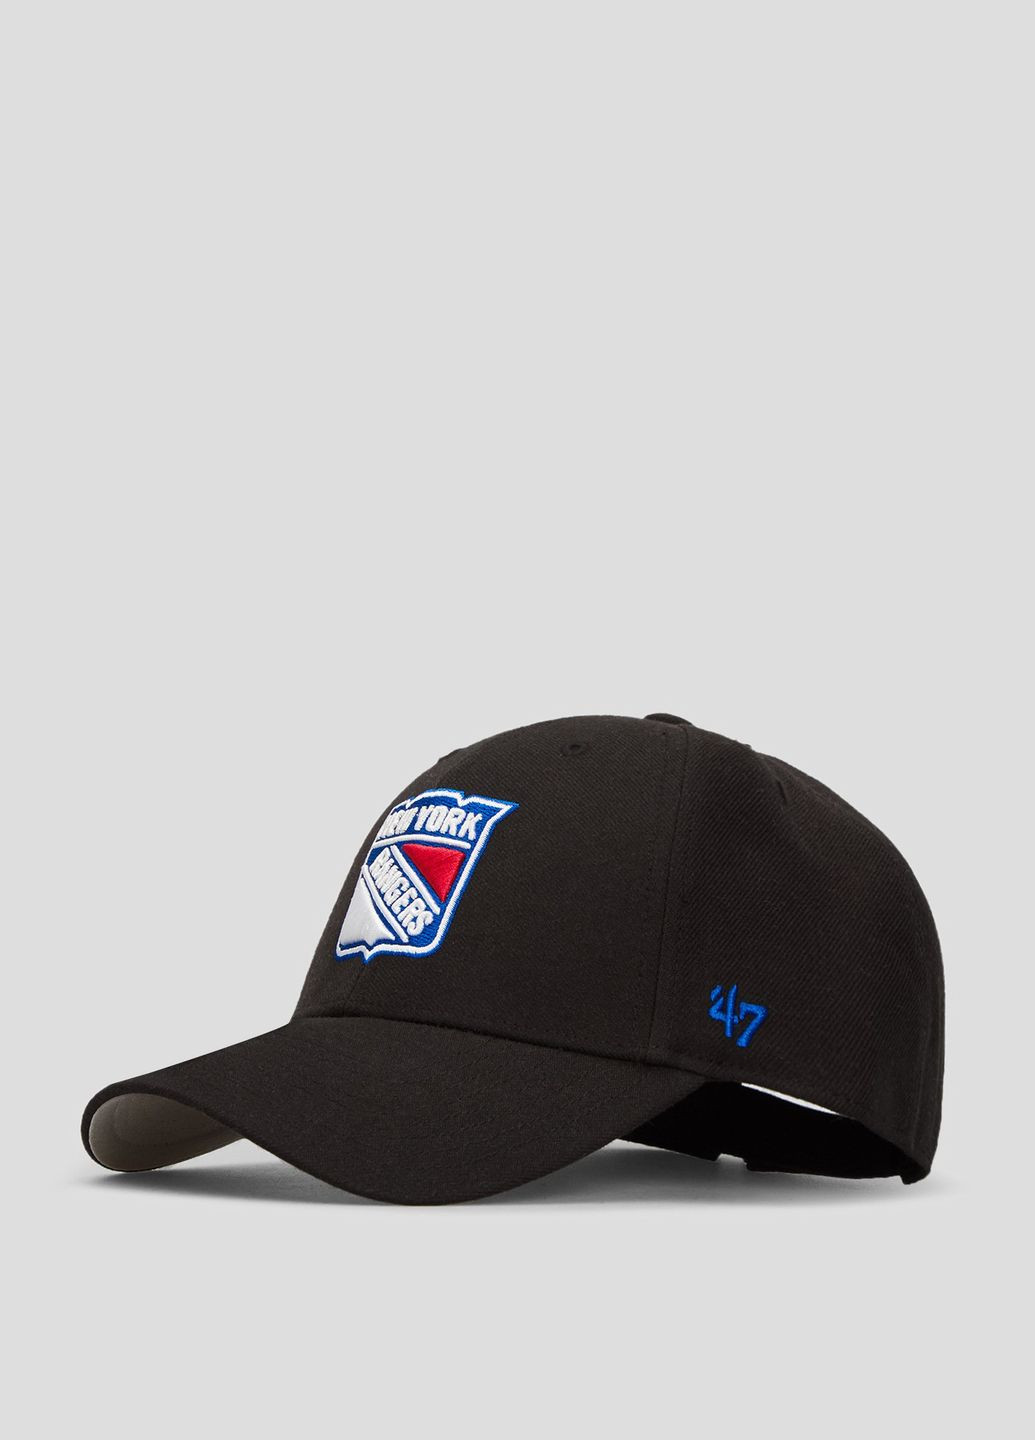 Кепка MVP NHL NEW YORK RANGERS черный, серый unisex OSFA 47 Brand (260597315)